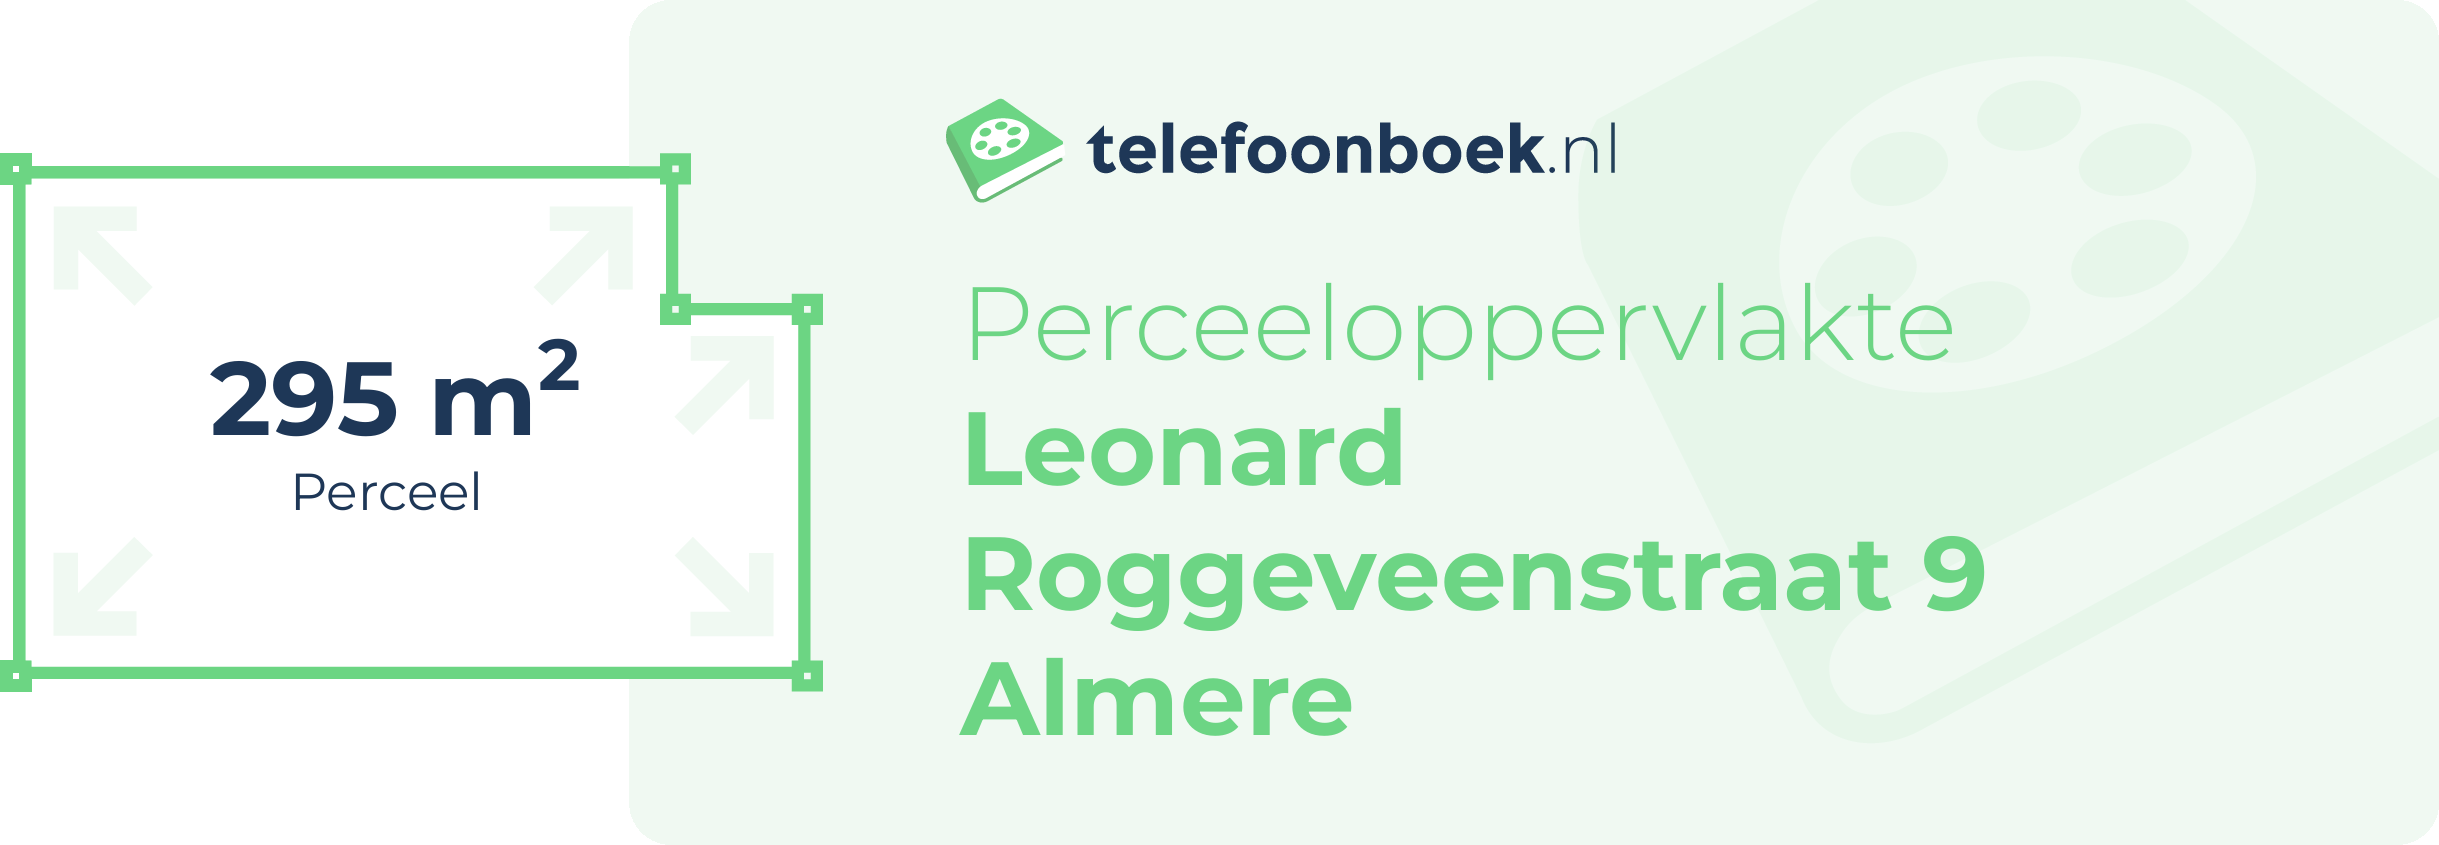 Perceeloppervlakte Leonard Roggeveenstraat 9 Almere